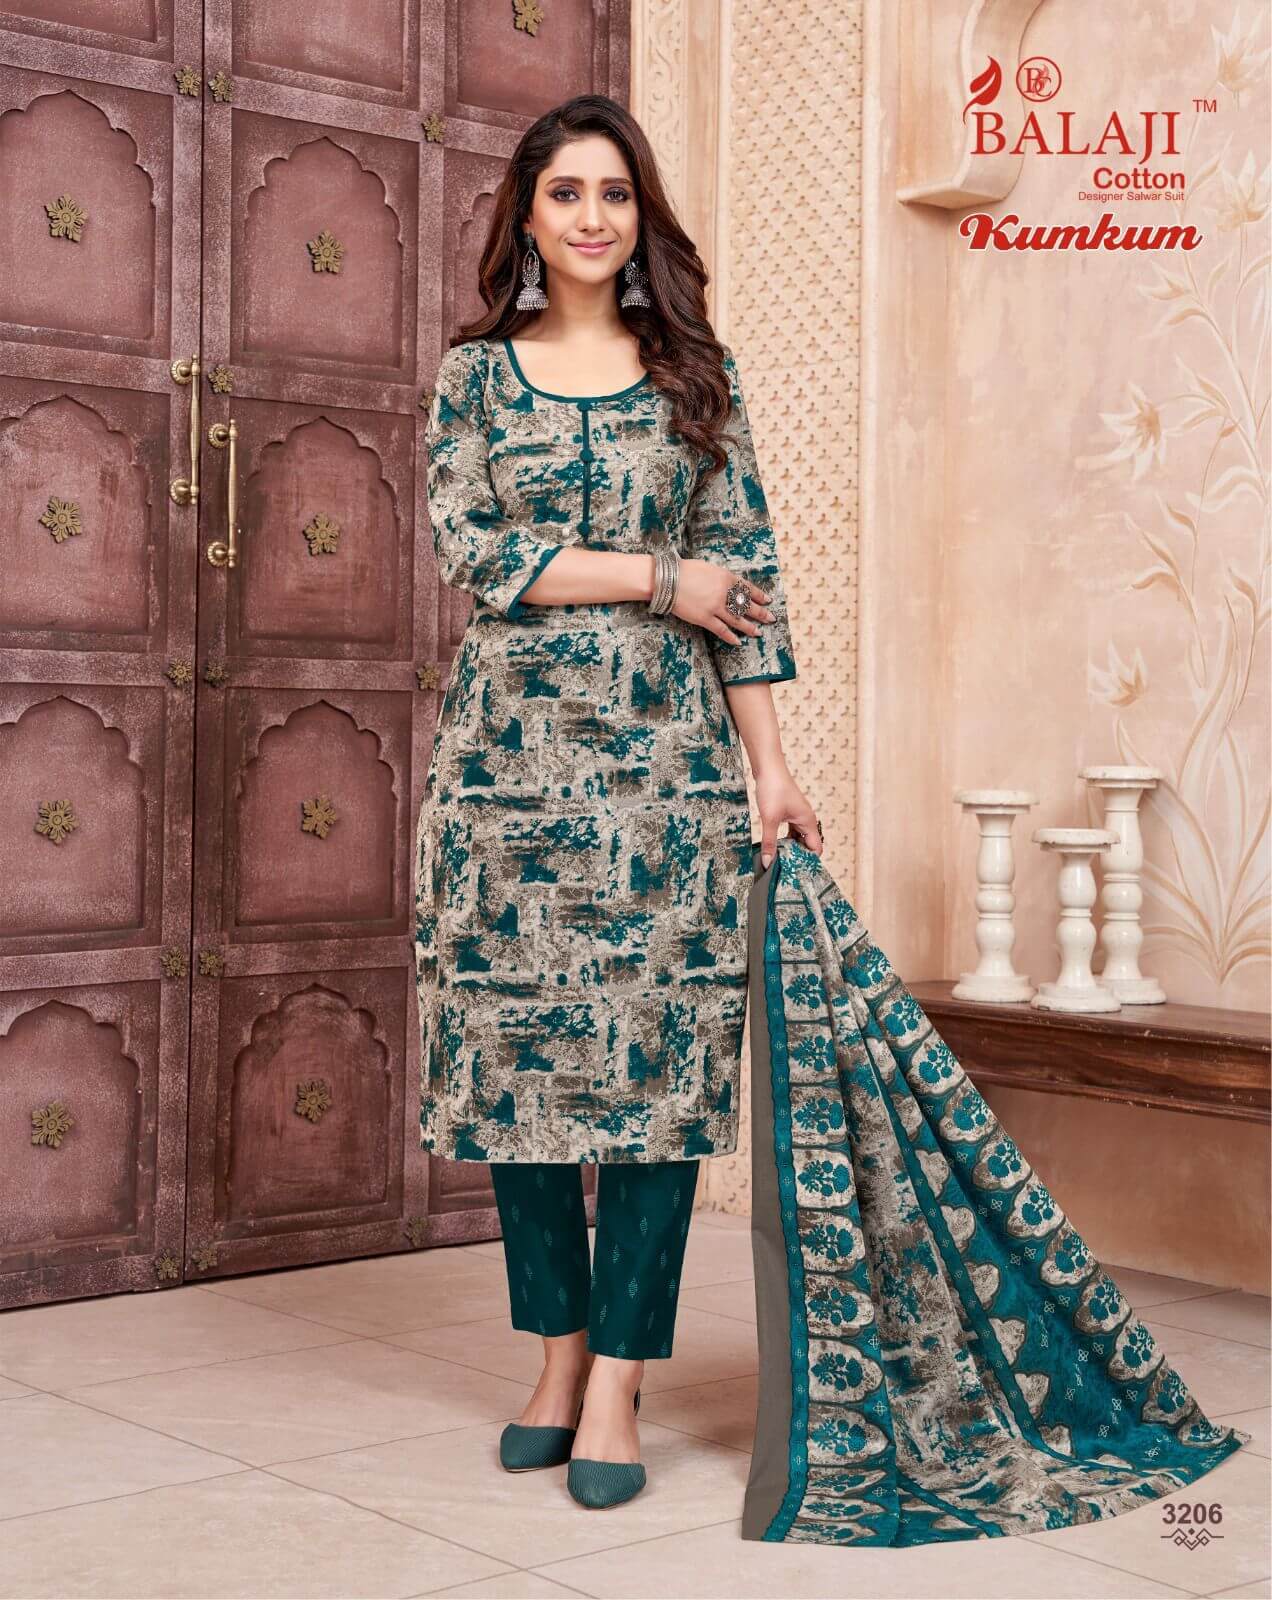 Balaji Cotton Kumkum Vol 32 A Readymade Dress collection 6